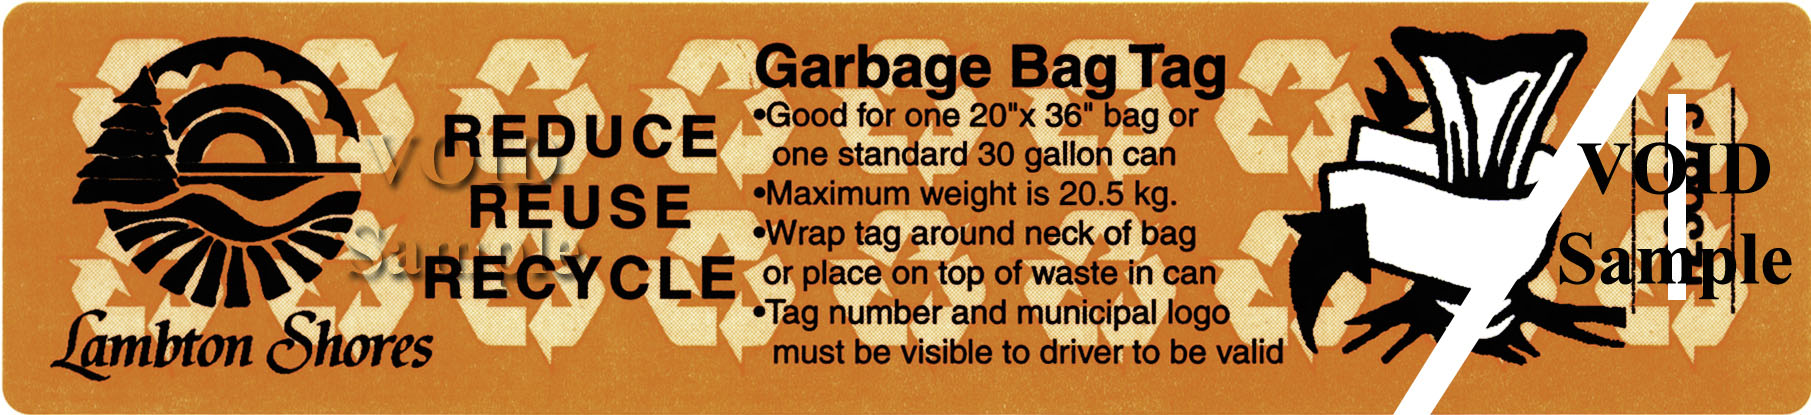 Garbage Bag Tag from Lambton Shores, ON